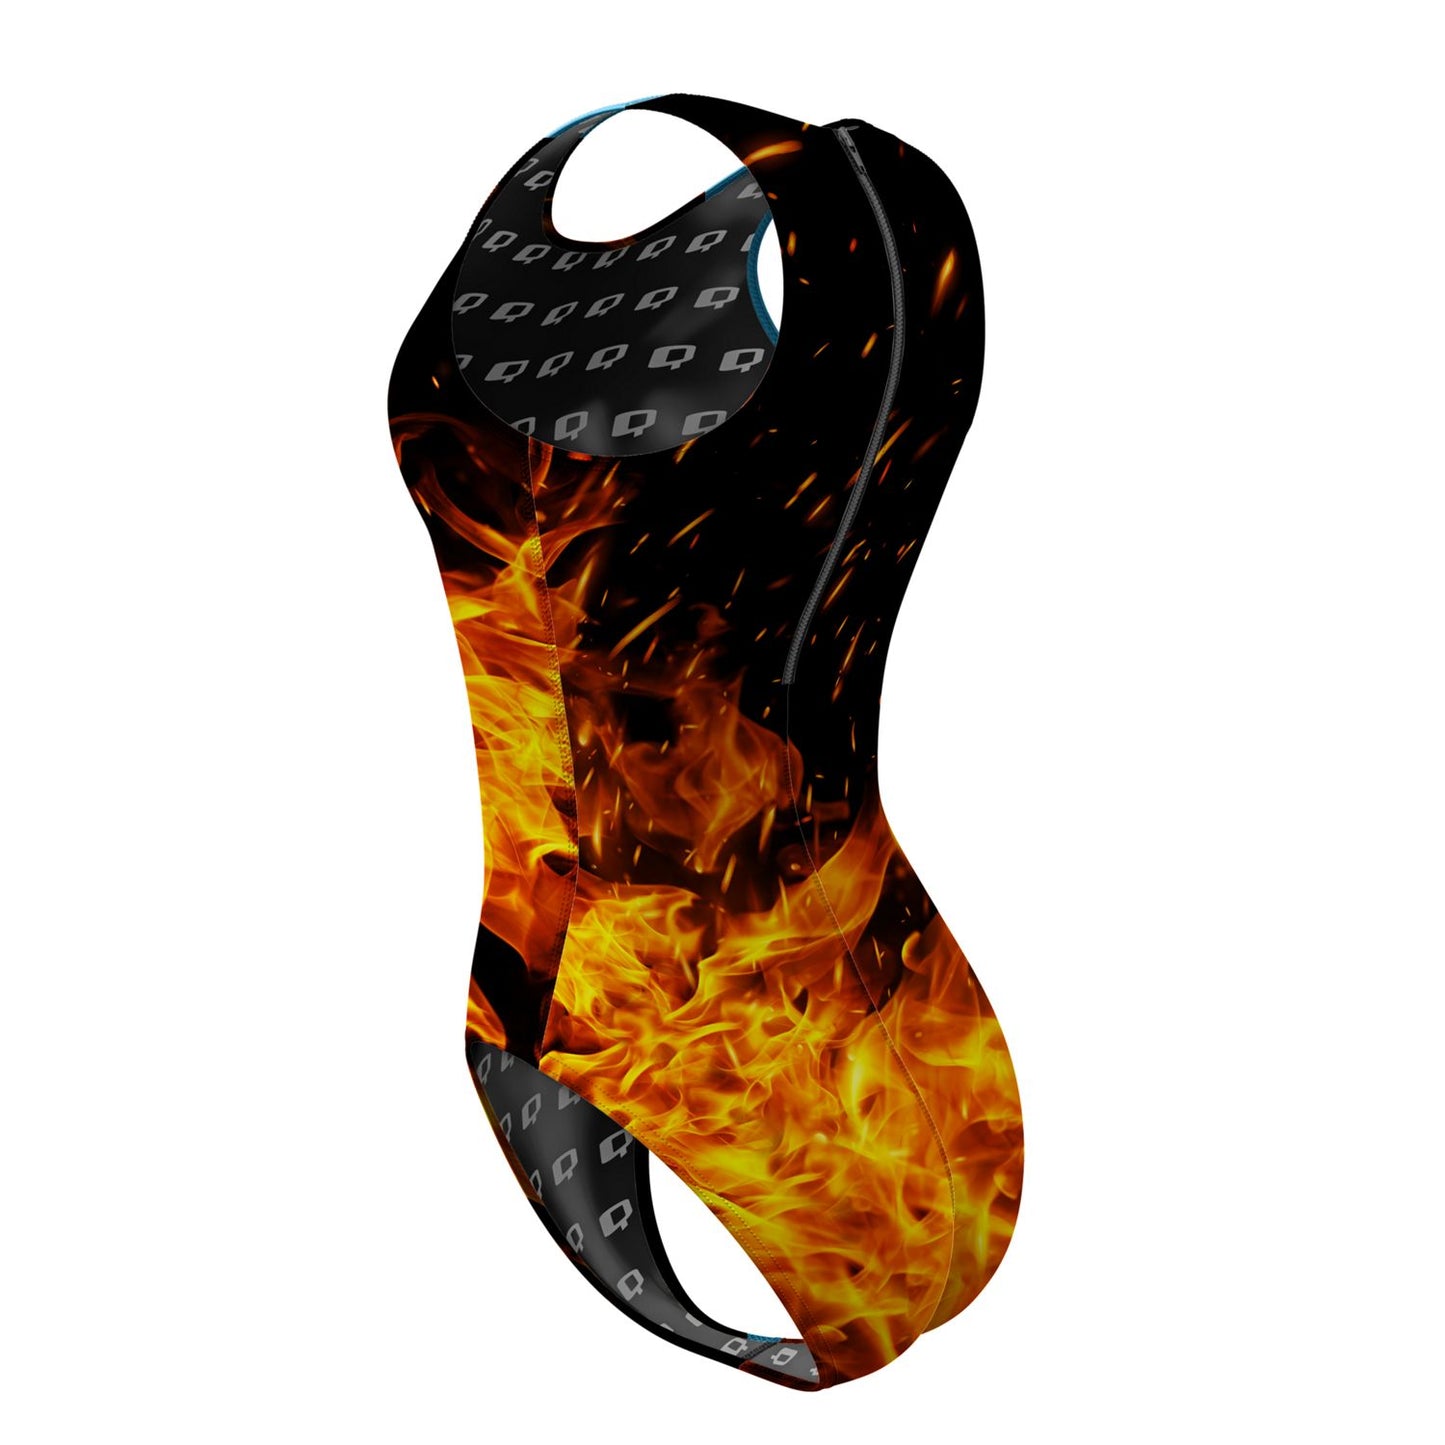 I'm on Fire - Women Waterpolo Swimsuit Classic Cut